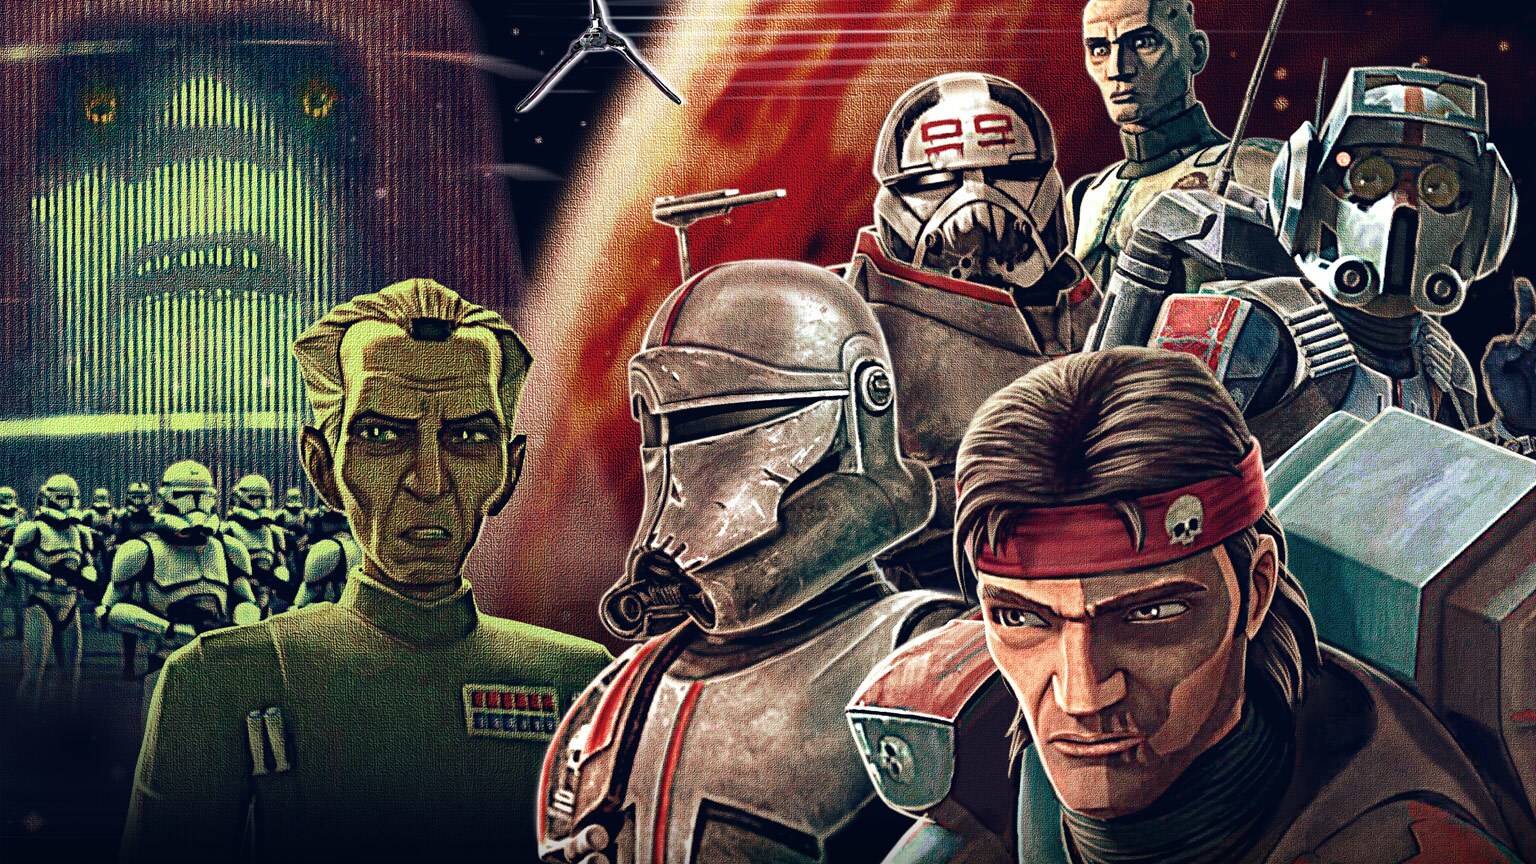 Design Star Wars Day posters online